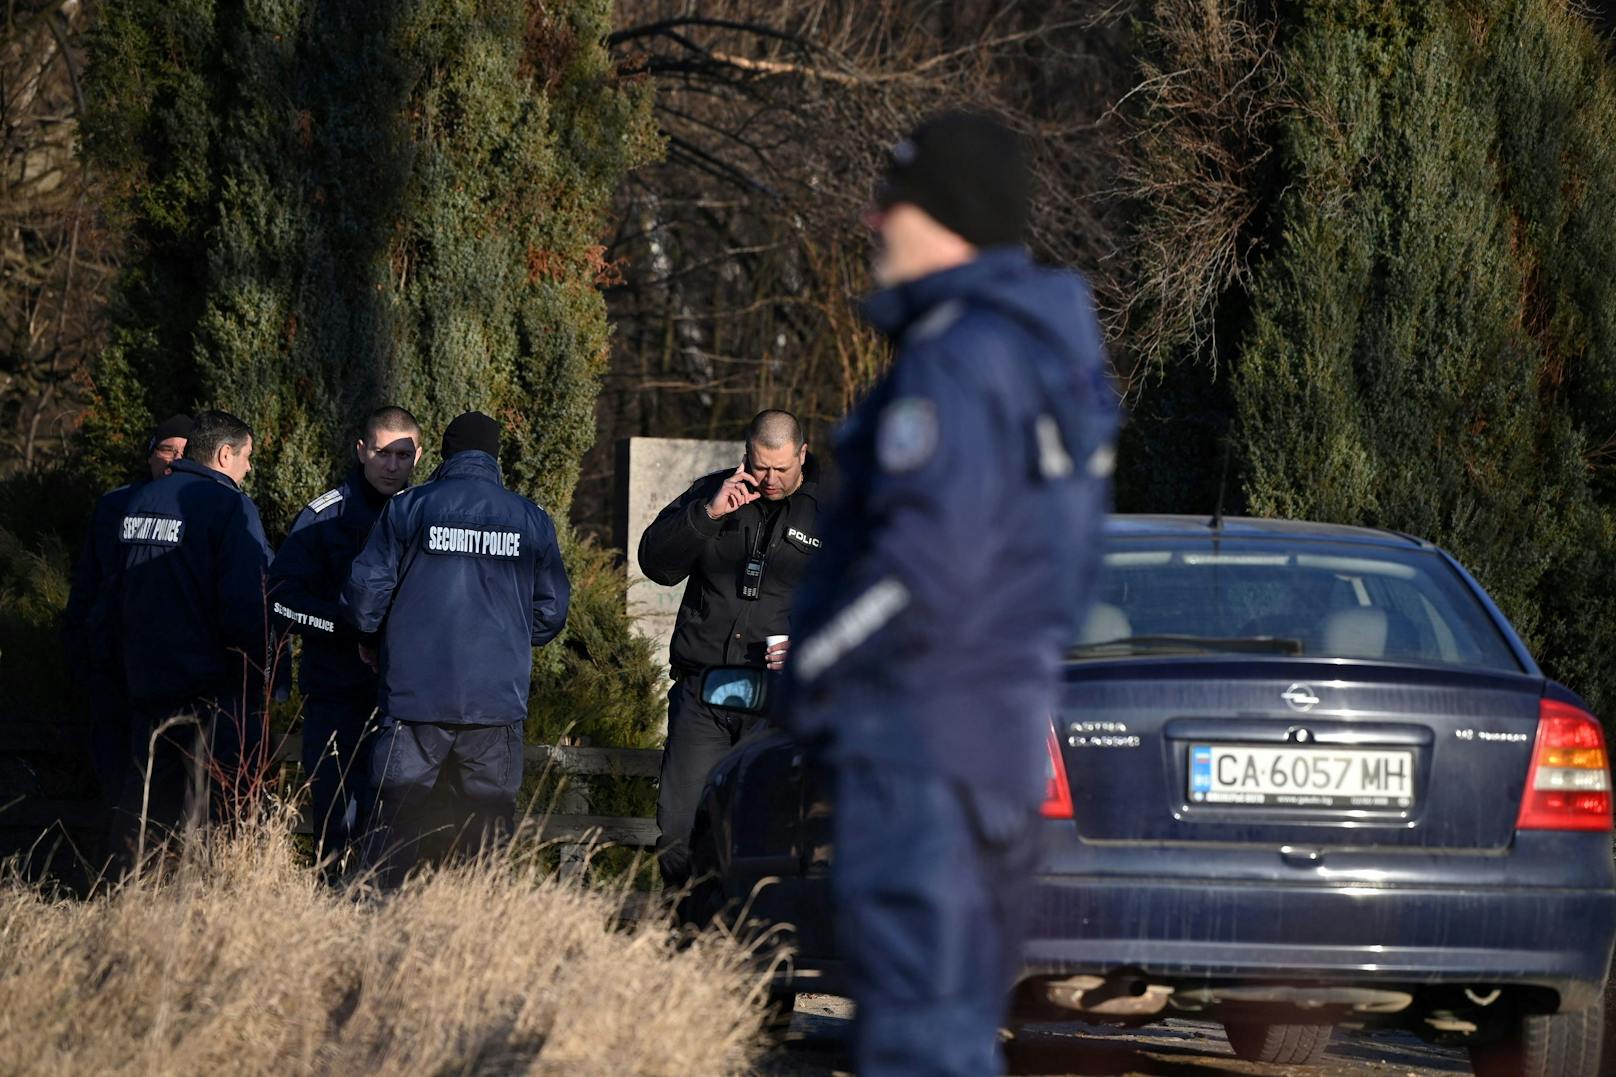 Knapp außerhalb der bulgarischen Hauptstadt Sofia fanden Polizisten 18 tote Migranten in einem LKW.